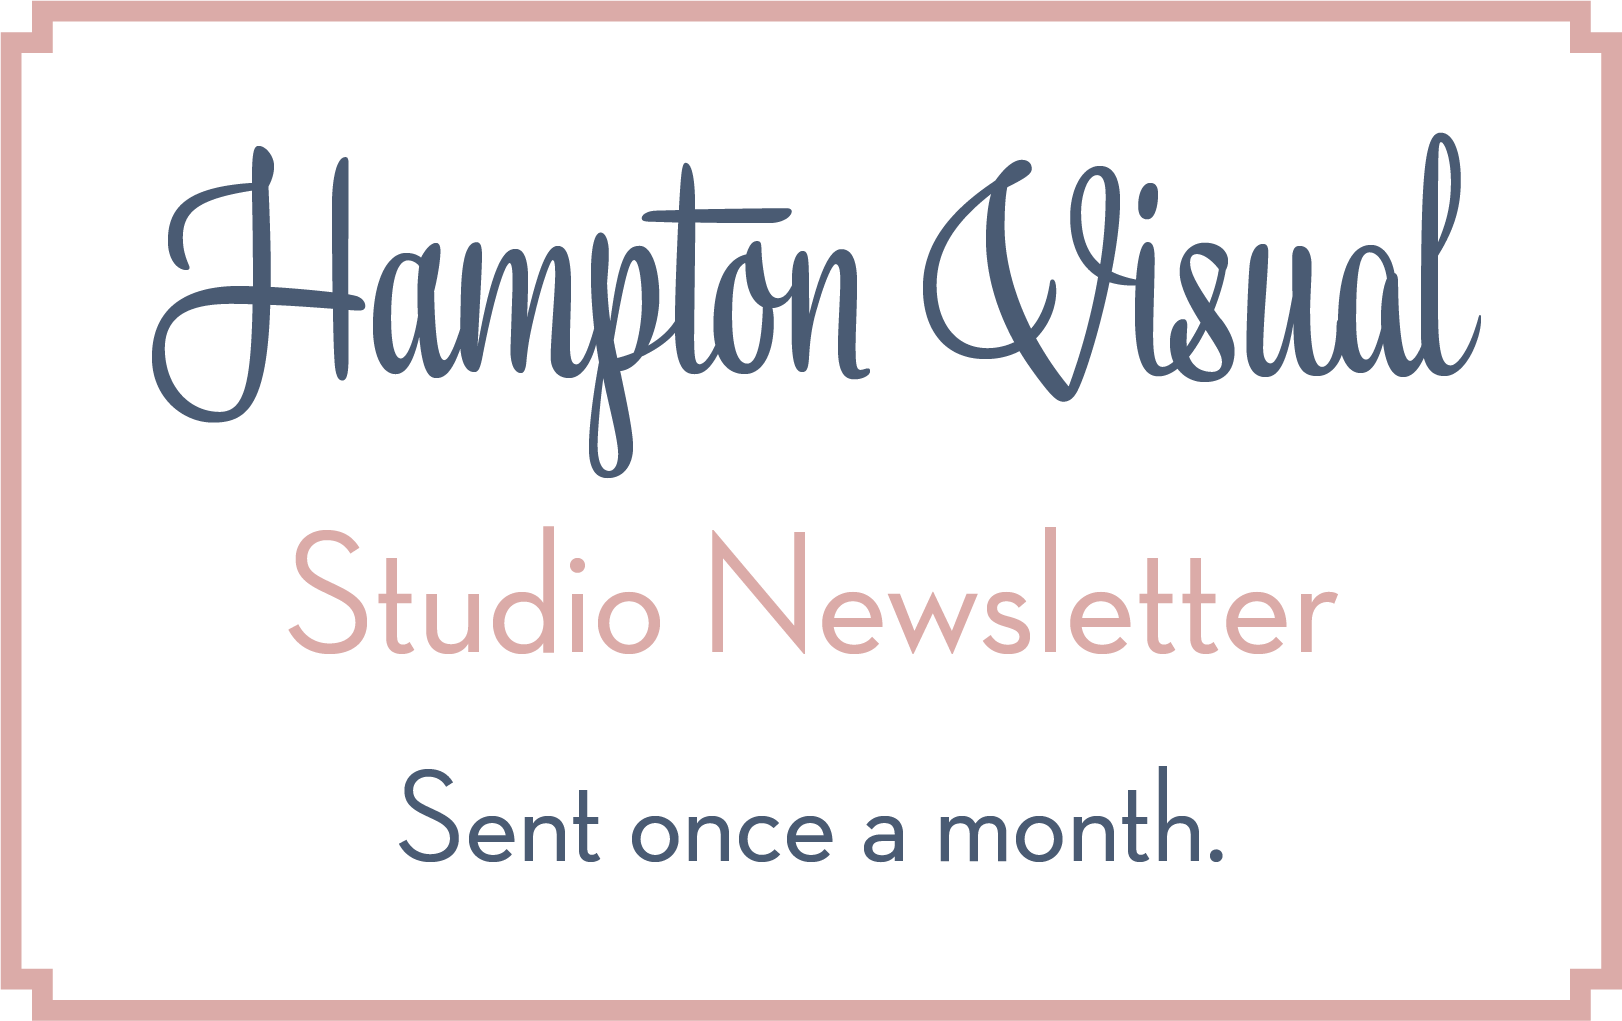 Hampton Visual newsletter sign up